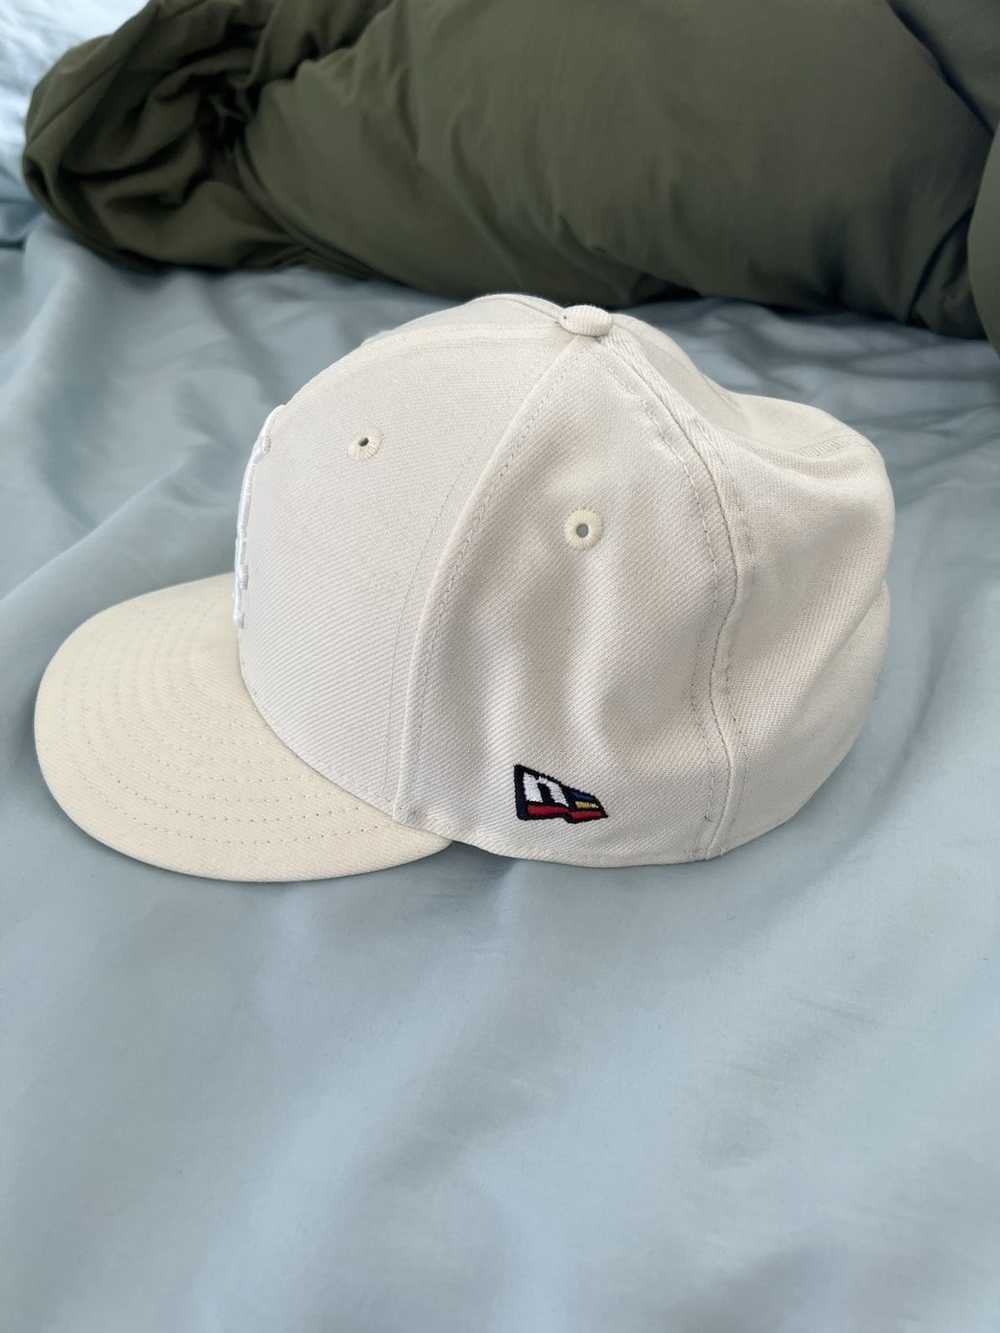 Joe Fresh JFG Chicago White Sox hat 7 5/8 - image 2